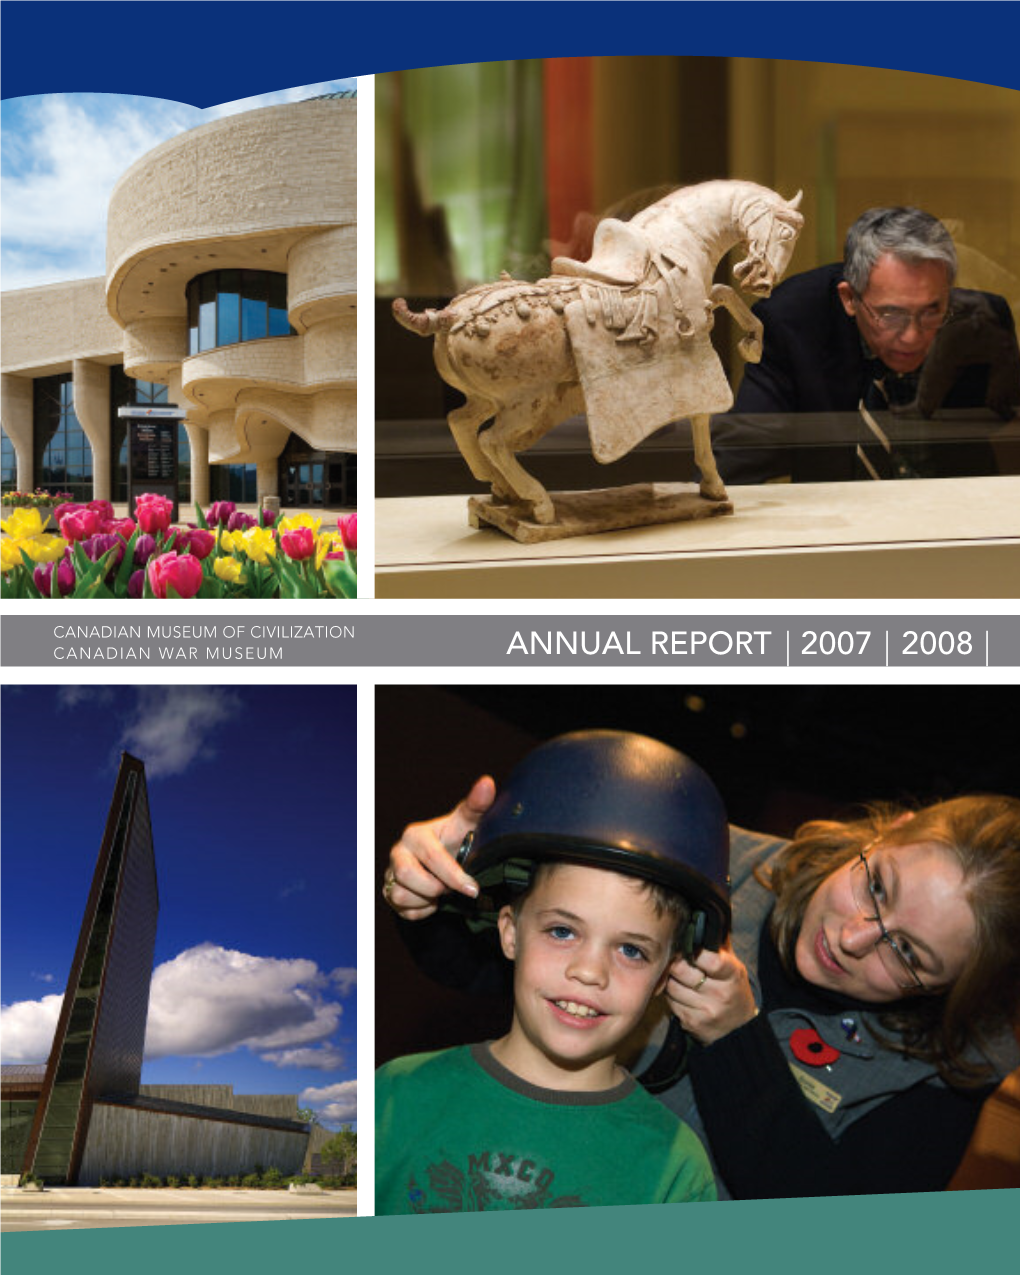 (CMCC) Annual Report, 2007-2008